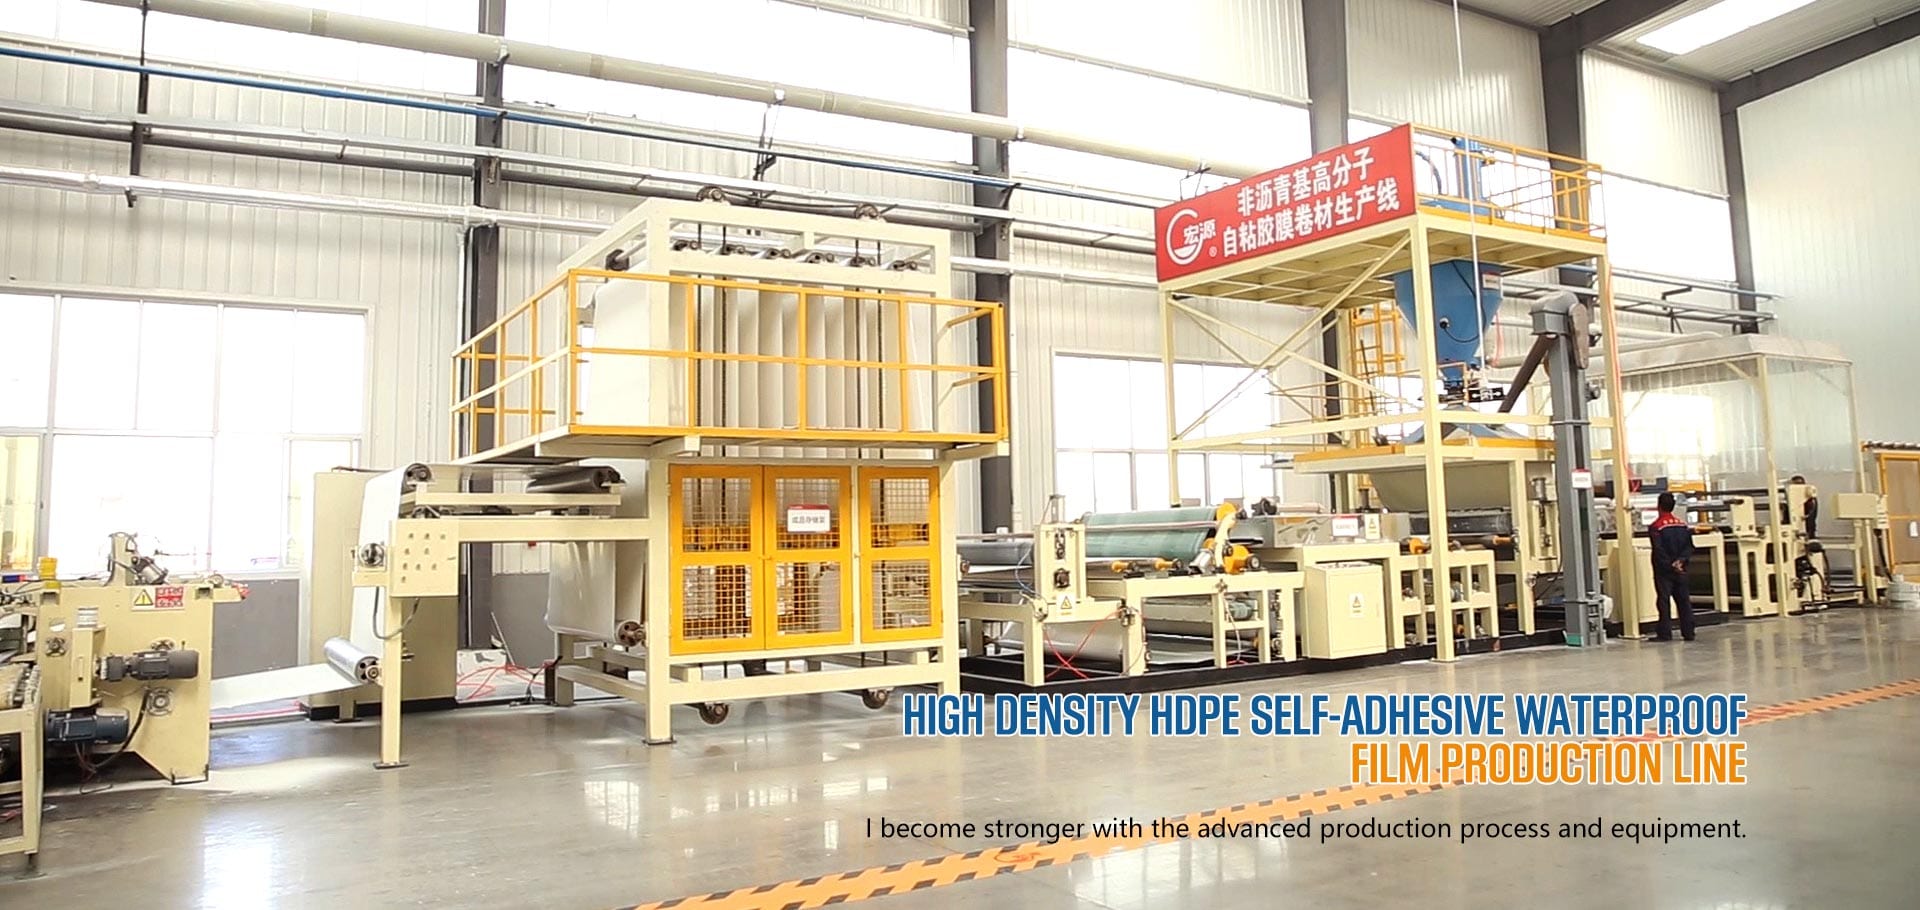 High density HDPE self-adhesive waterproof line film production